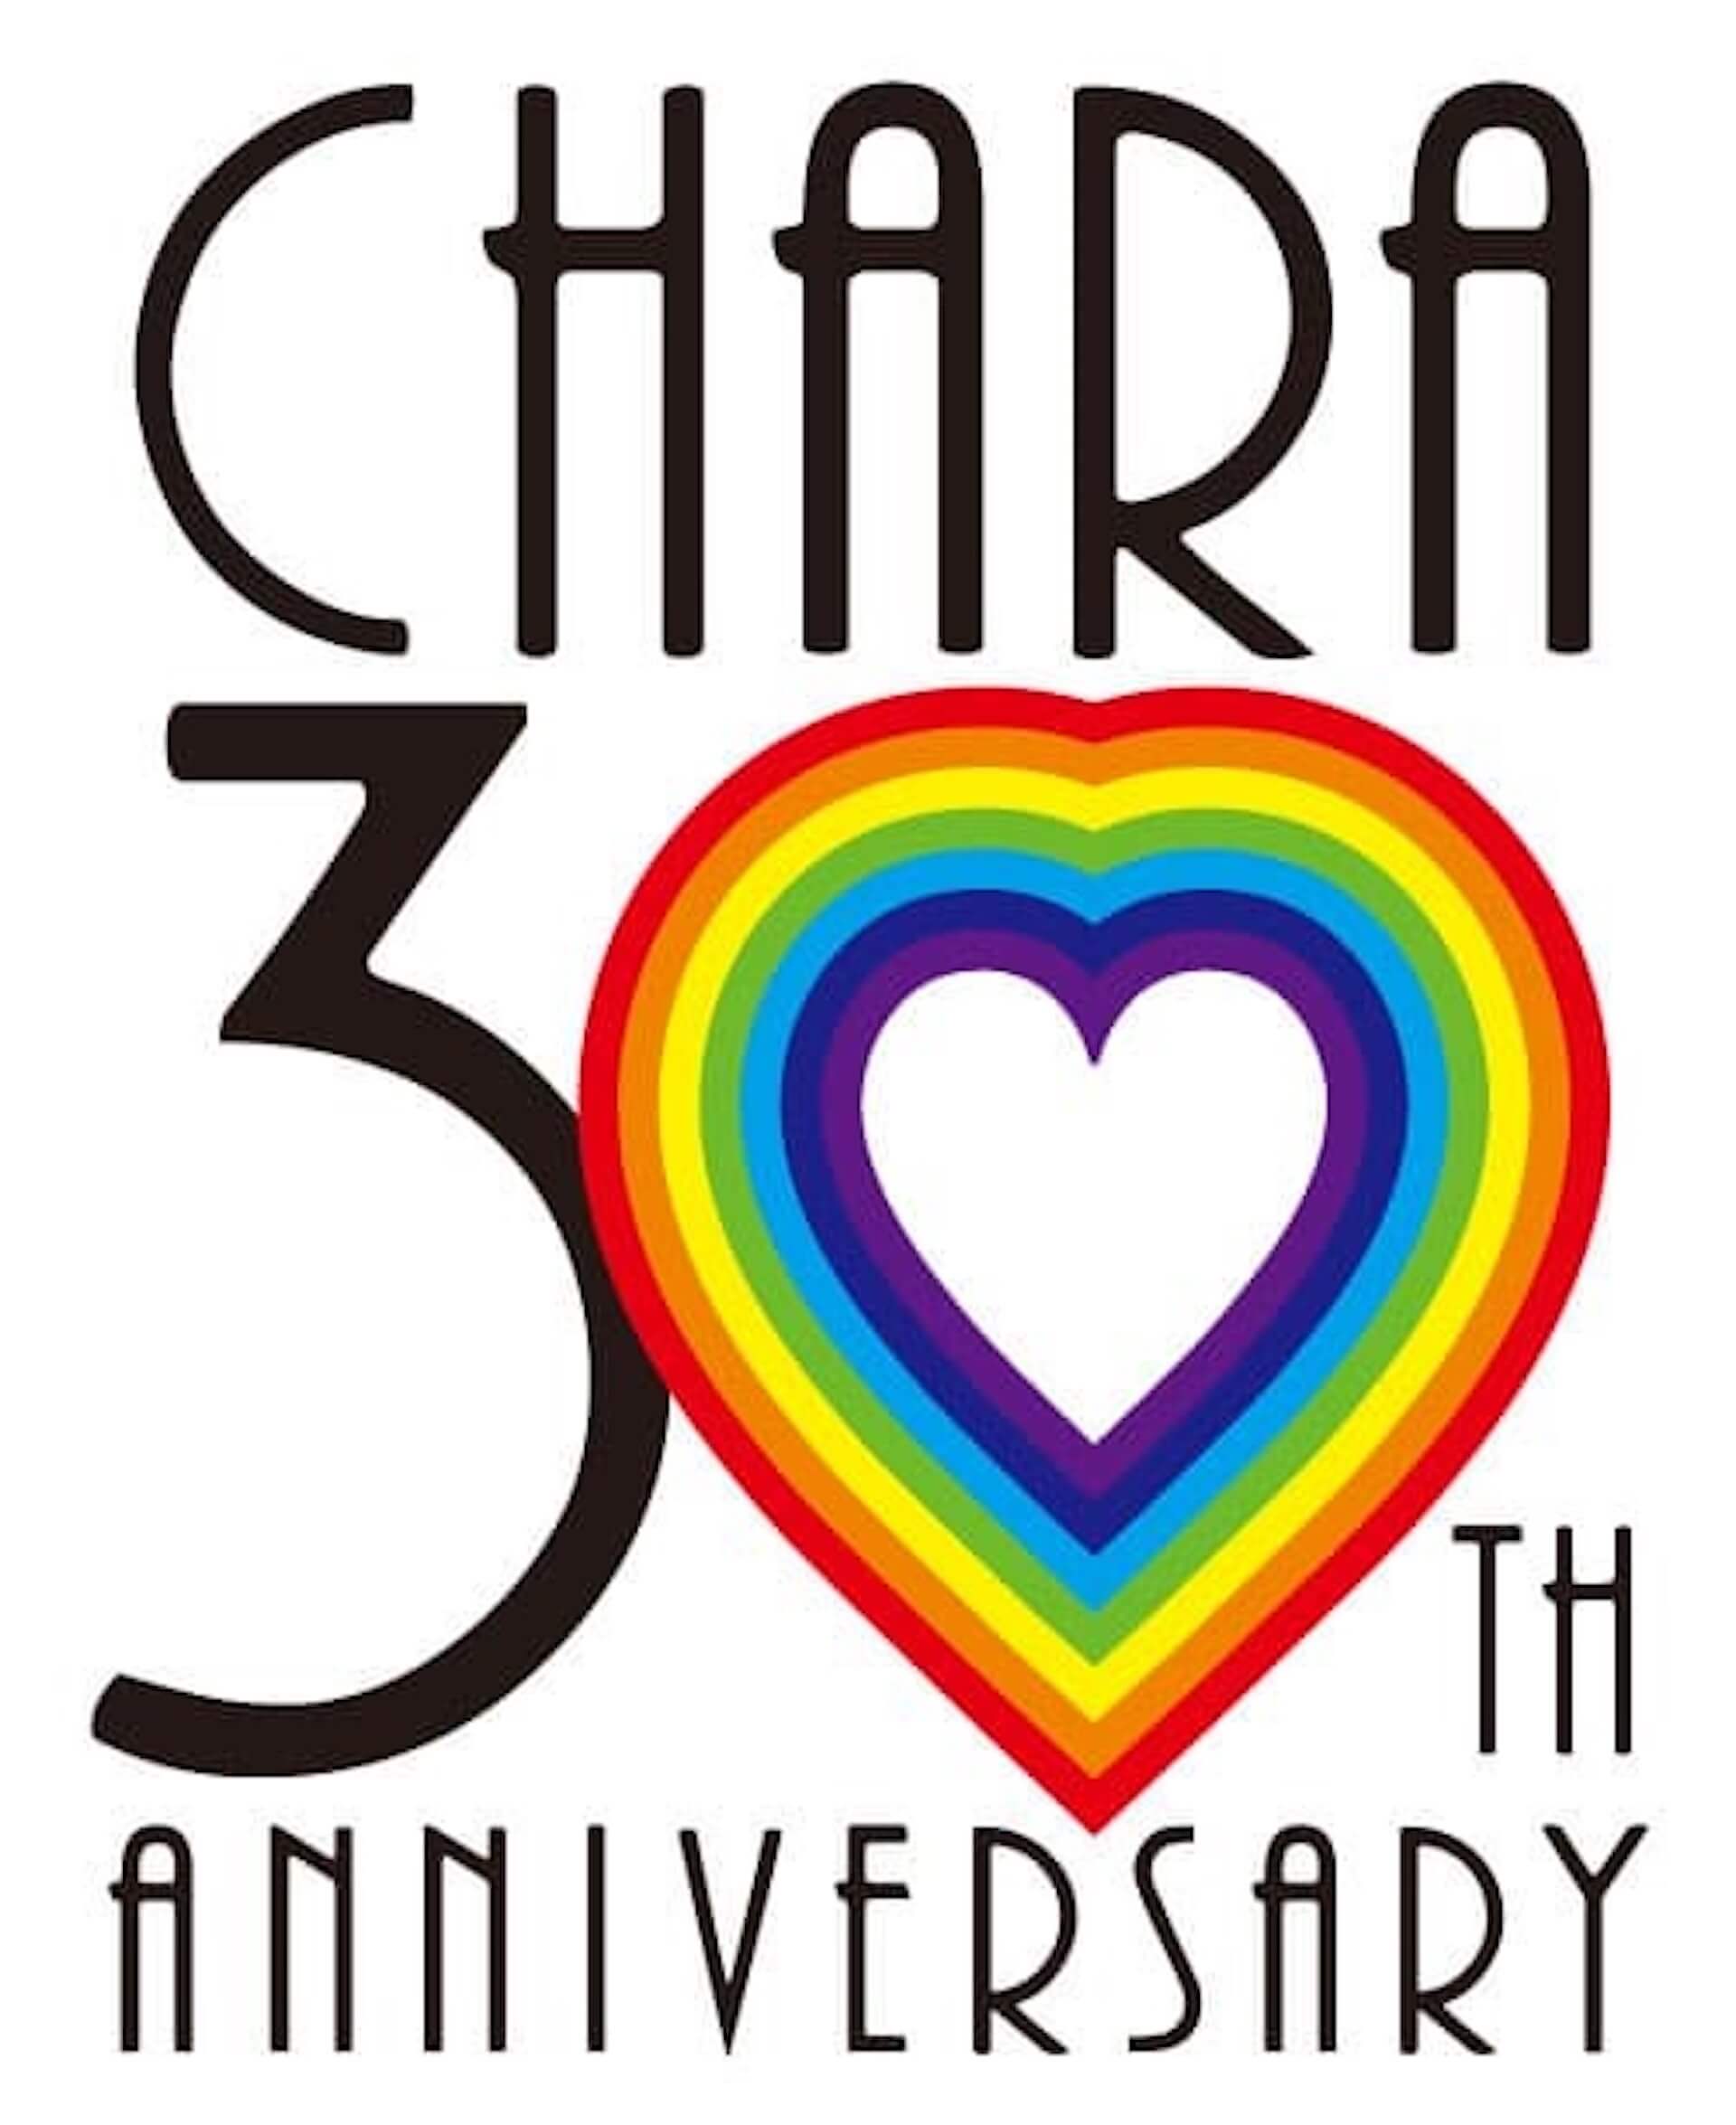 Charaのデビュー30周年を飾るオーケストラ公演が開催決定！ music_220113_chara_04